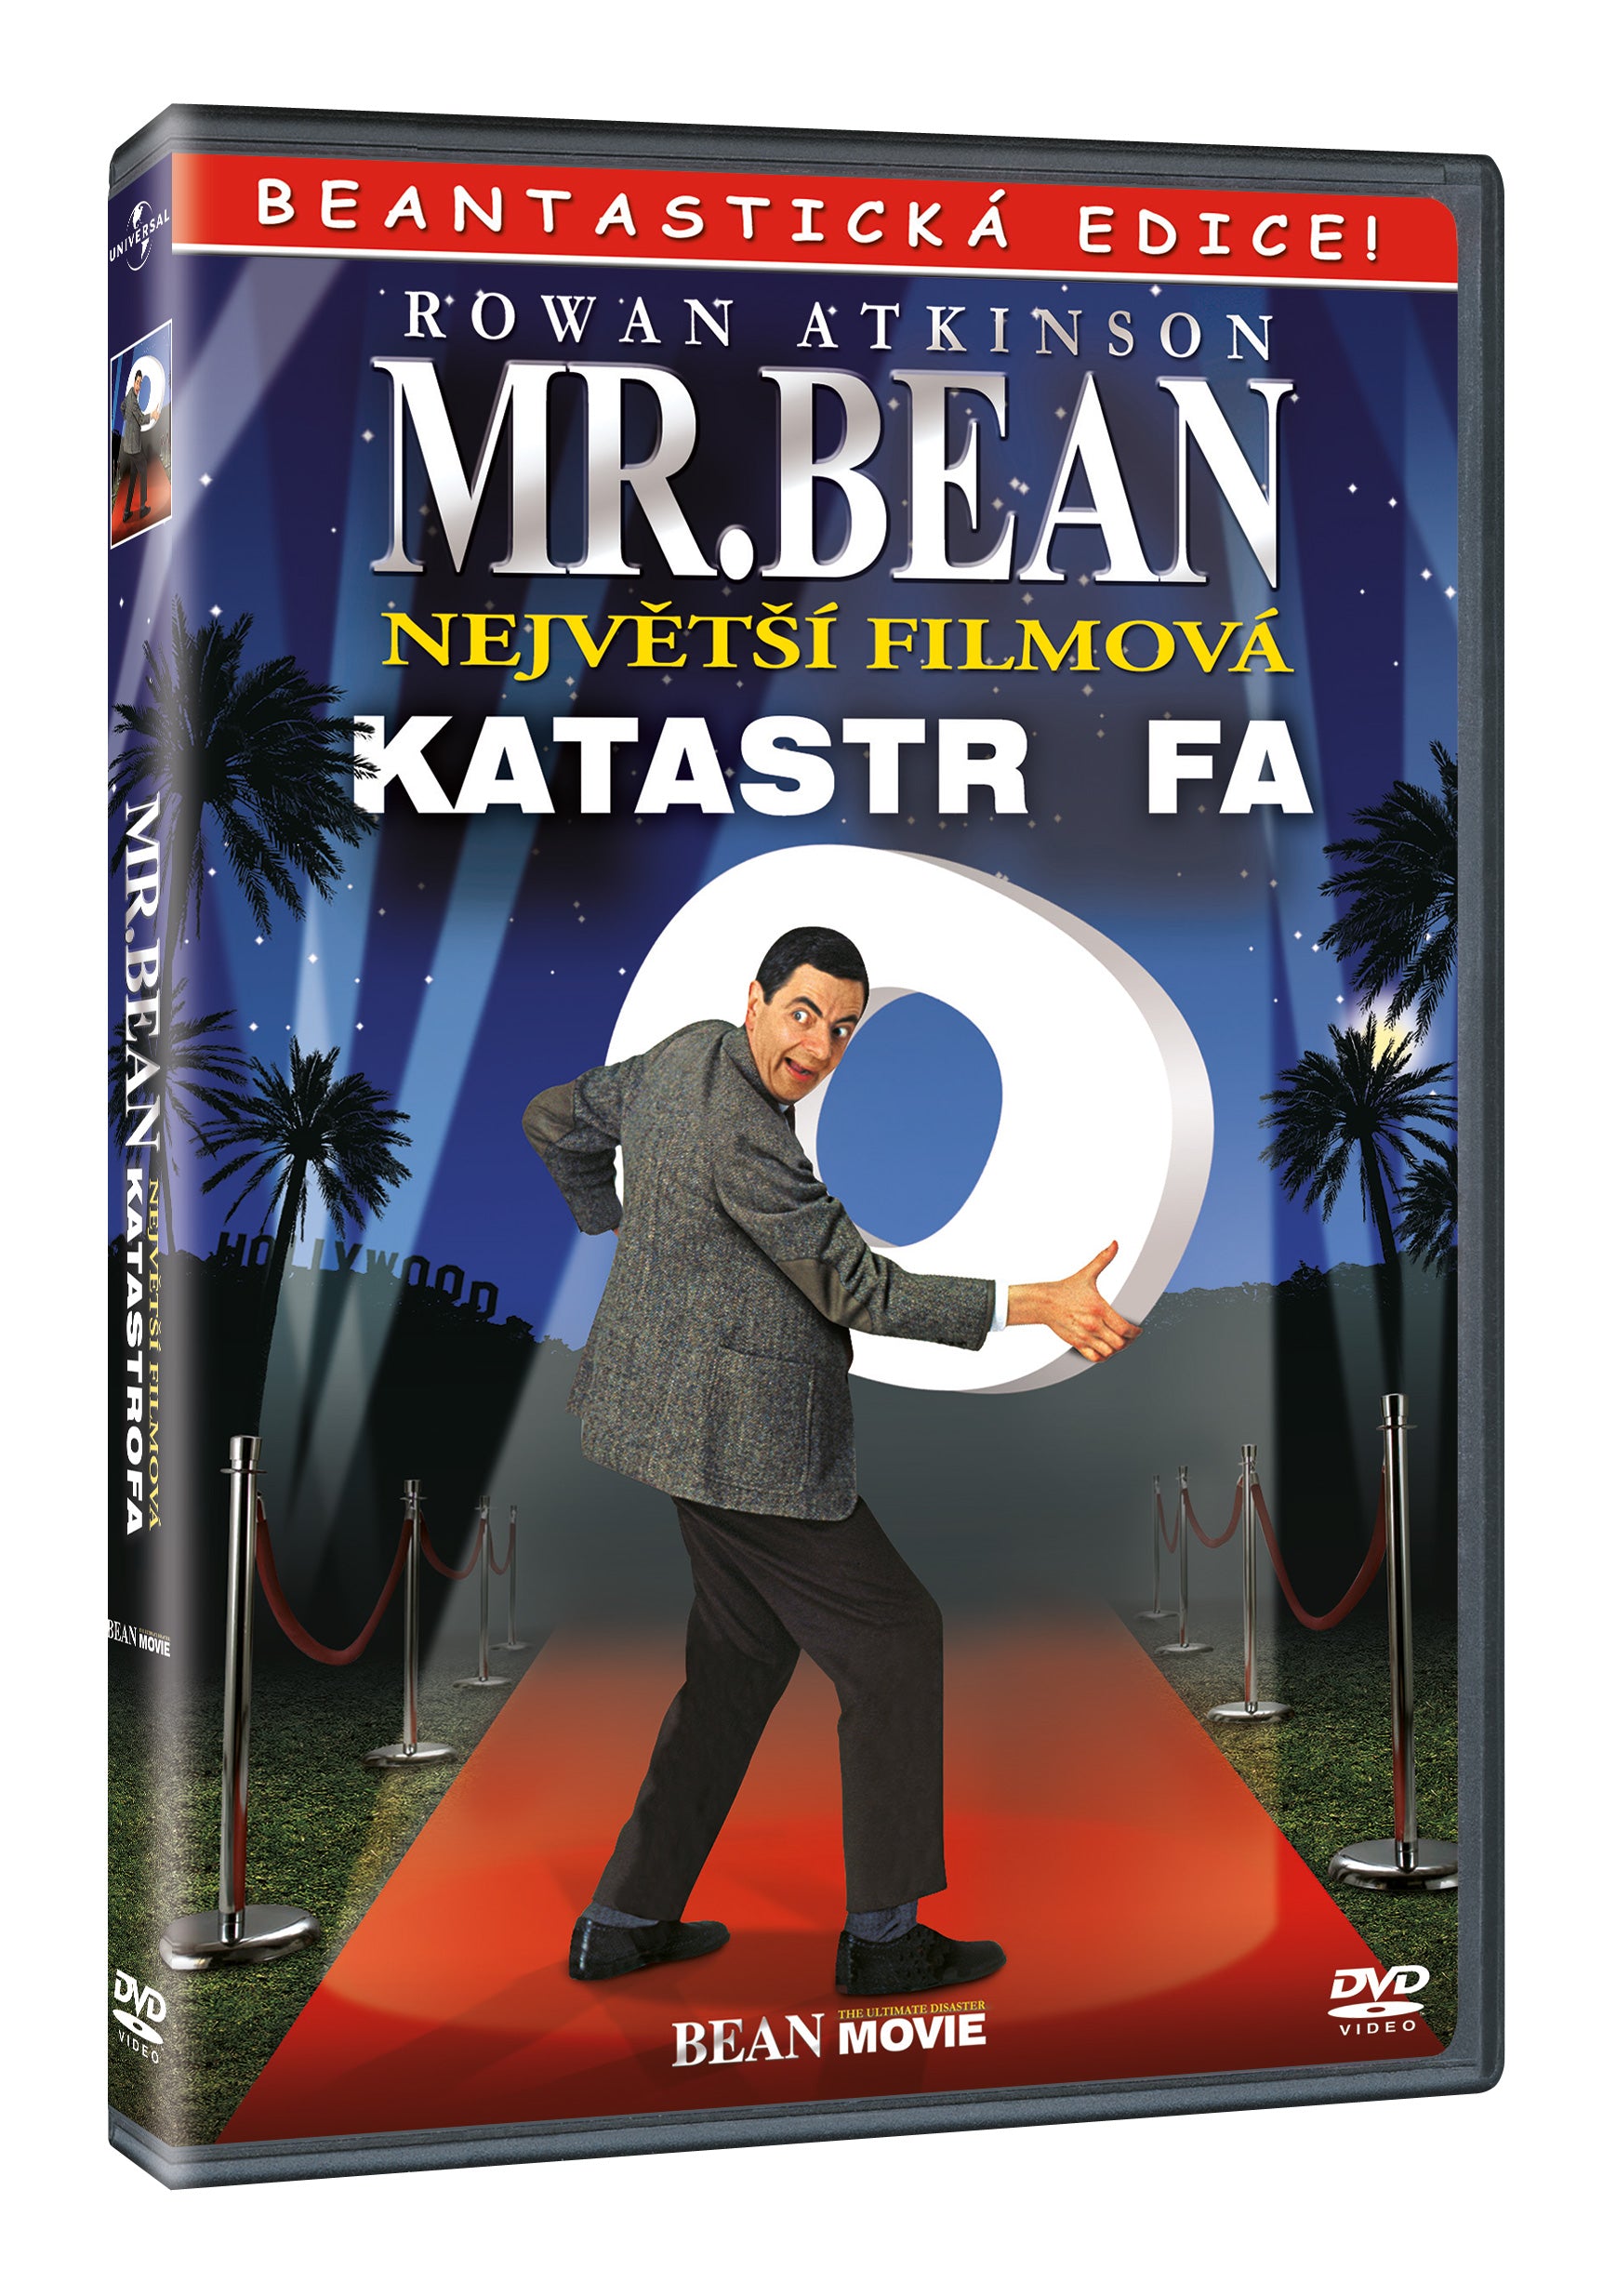 Mr. Bean: Nejvetsi filmova katastrofa DVD / Bean